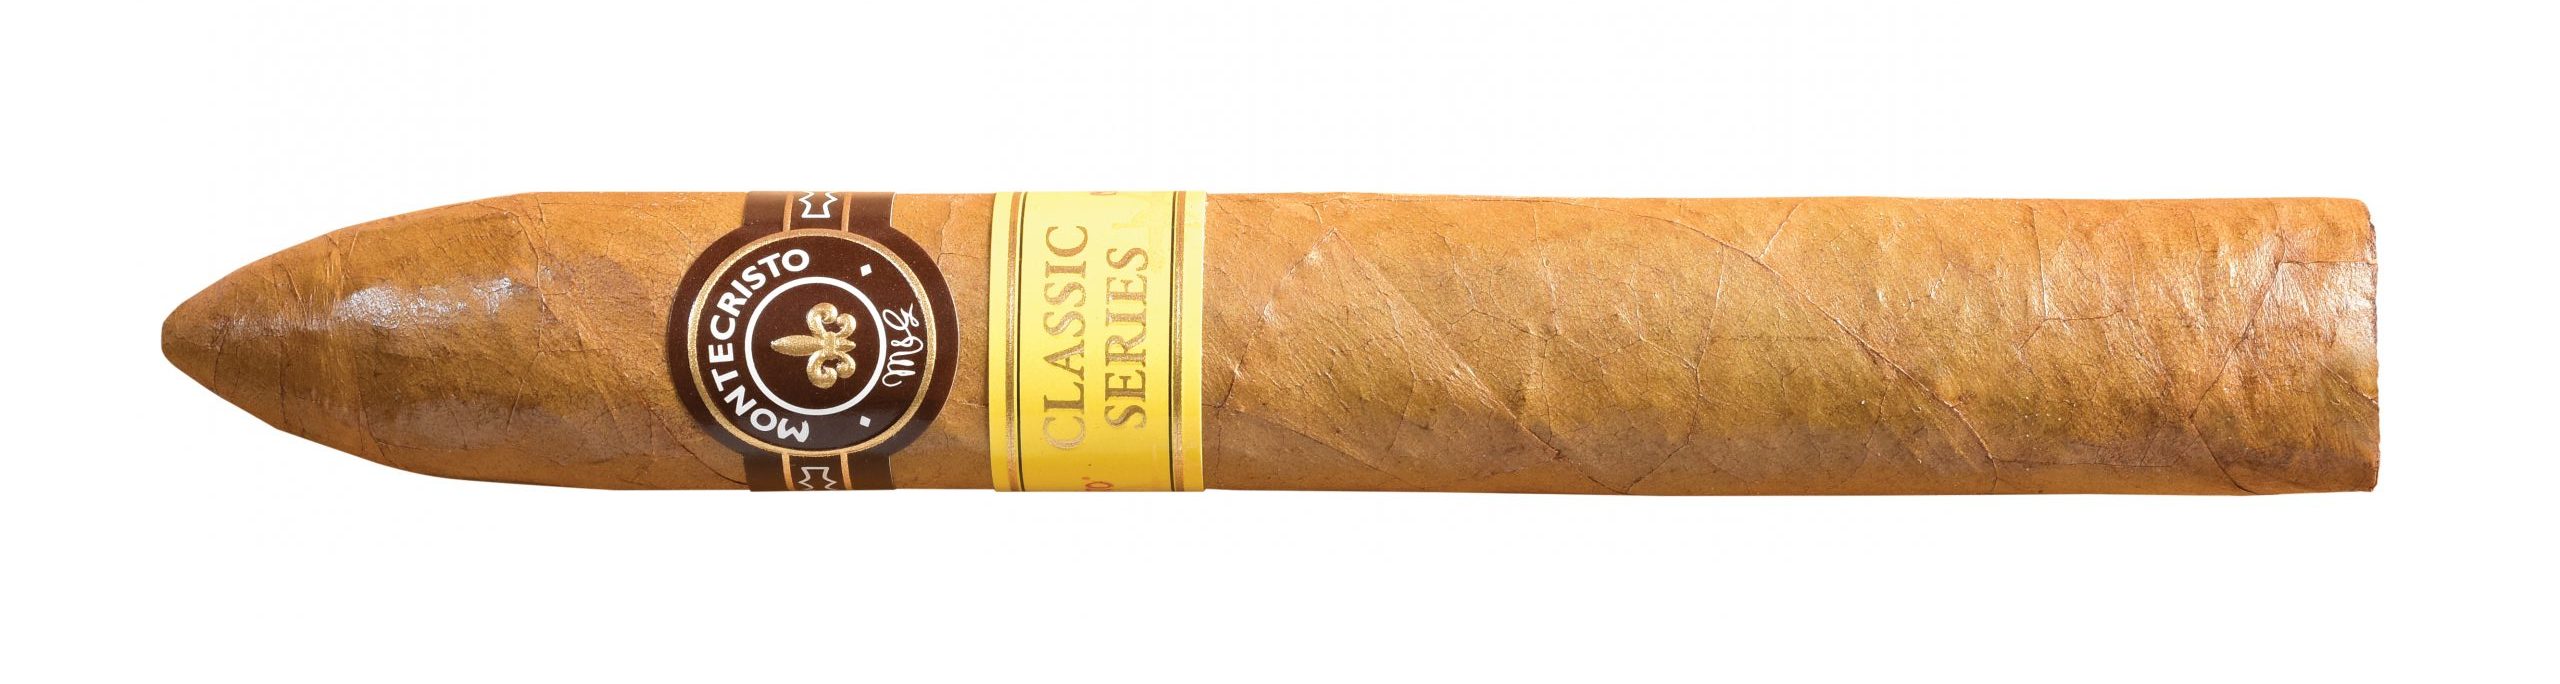 montecristo box pressed number 2 single cigar